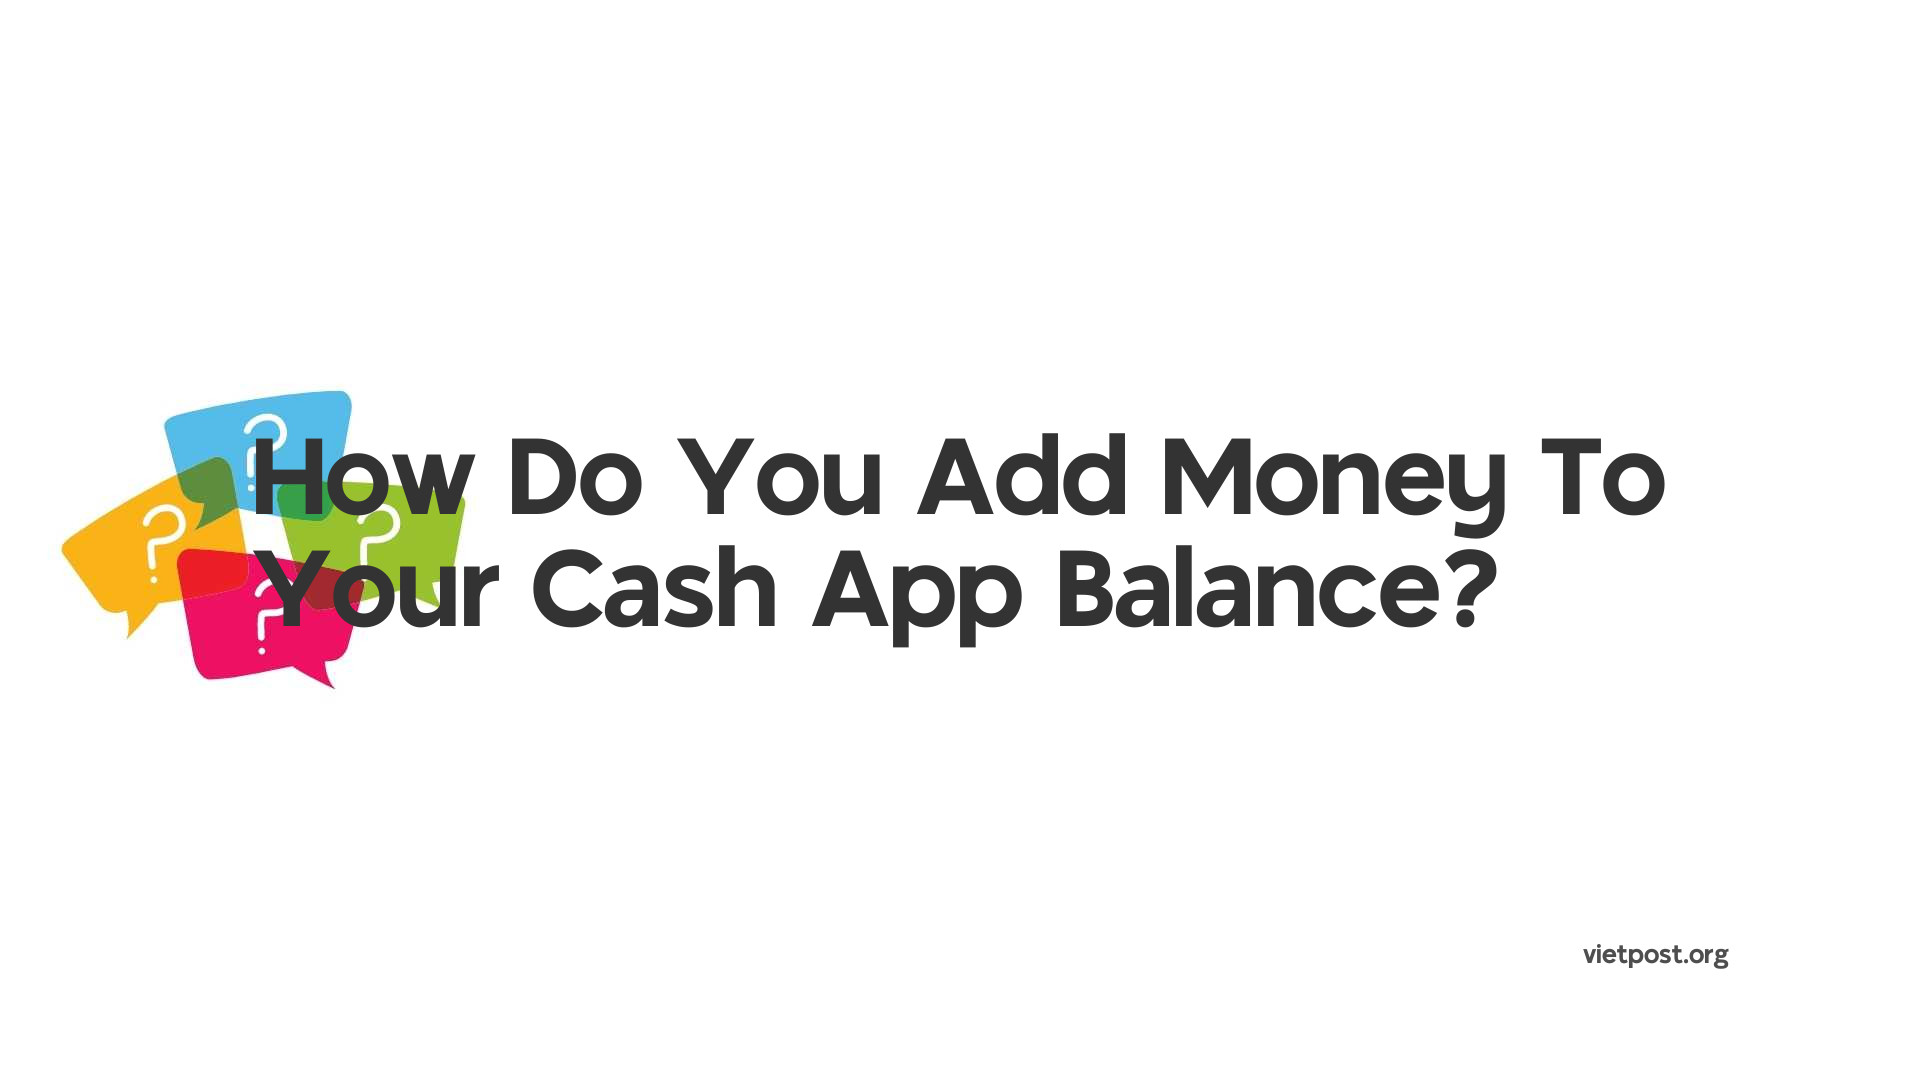 How Do You Add Money To Your Cash App Balance?